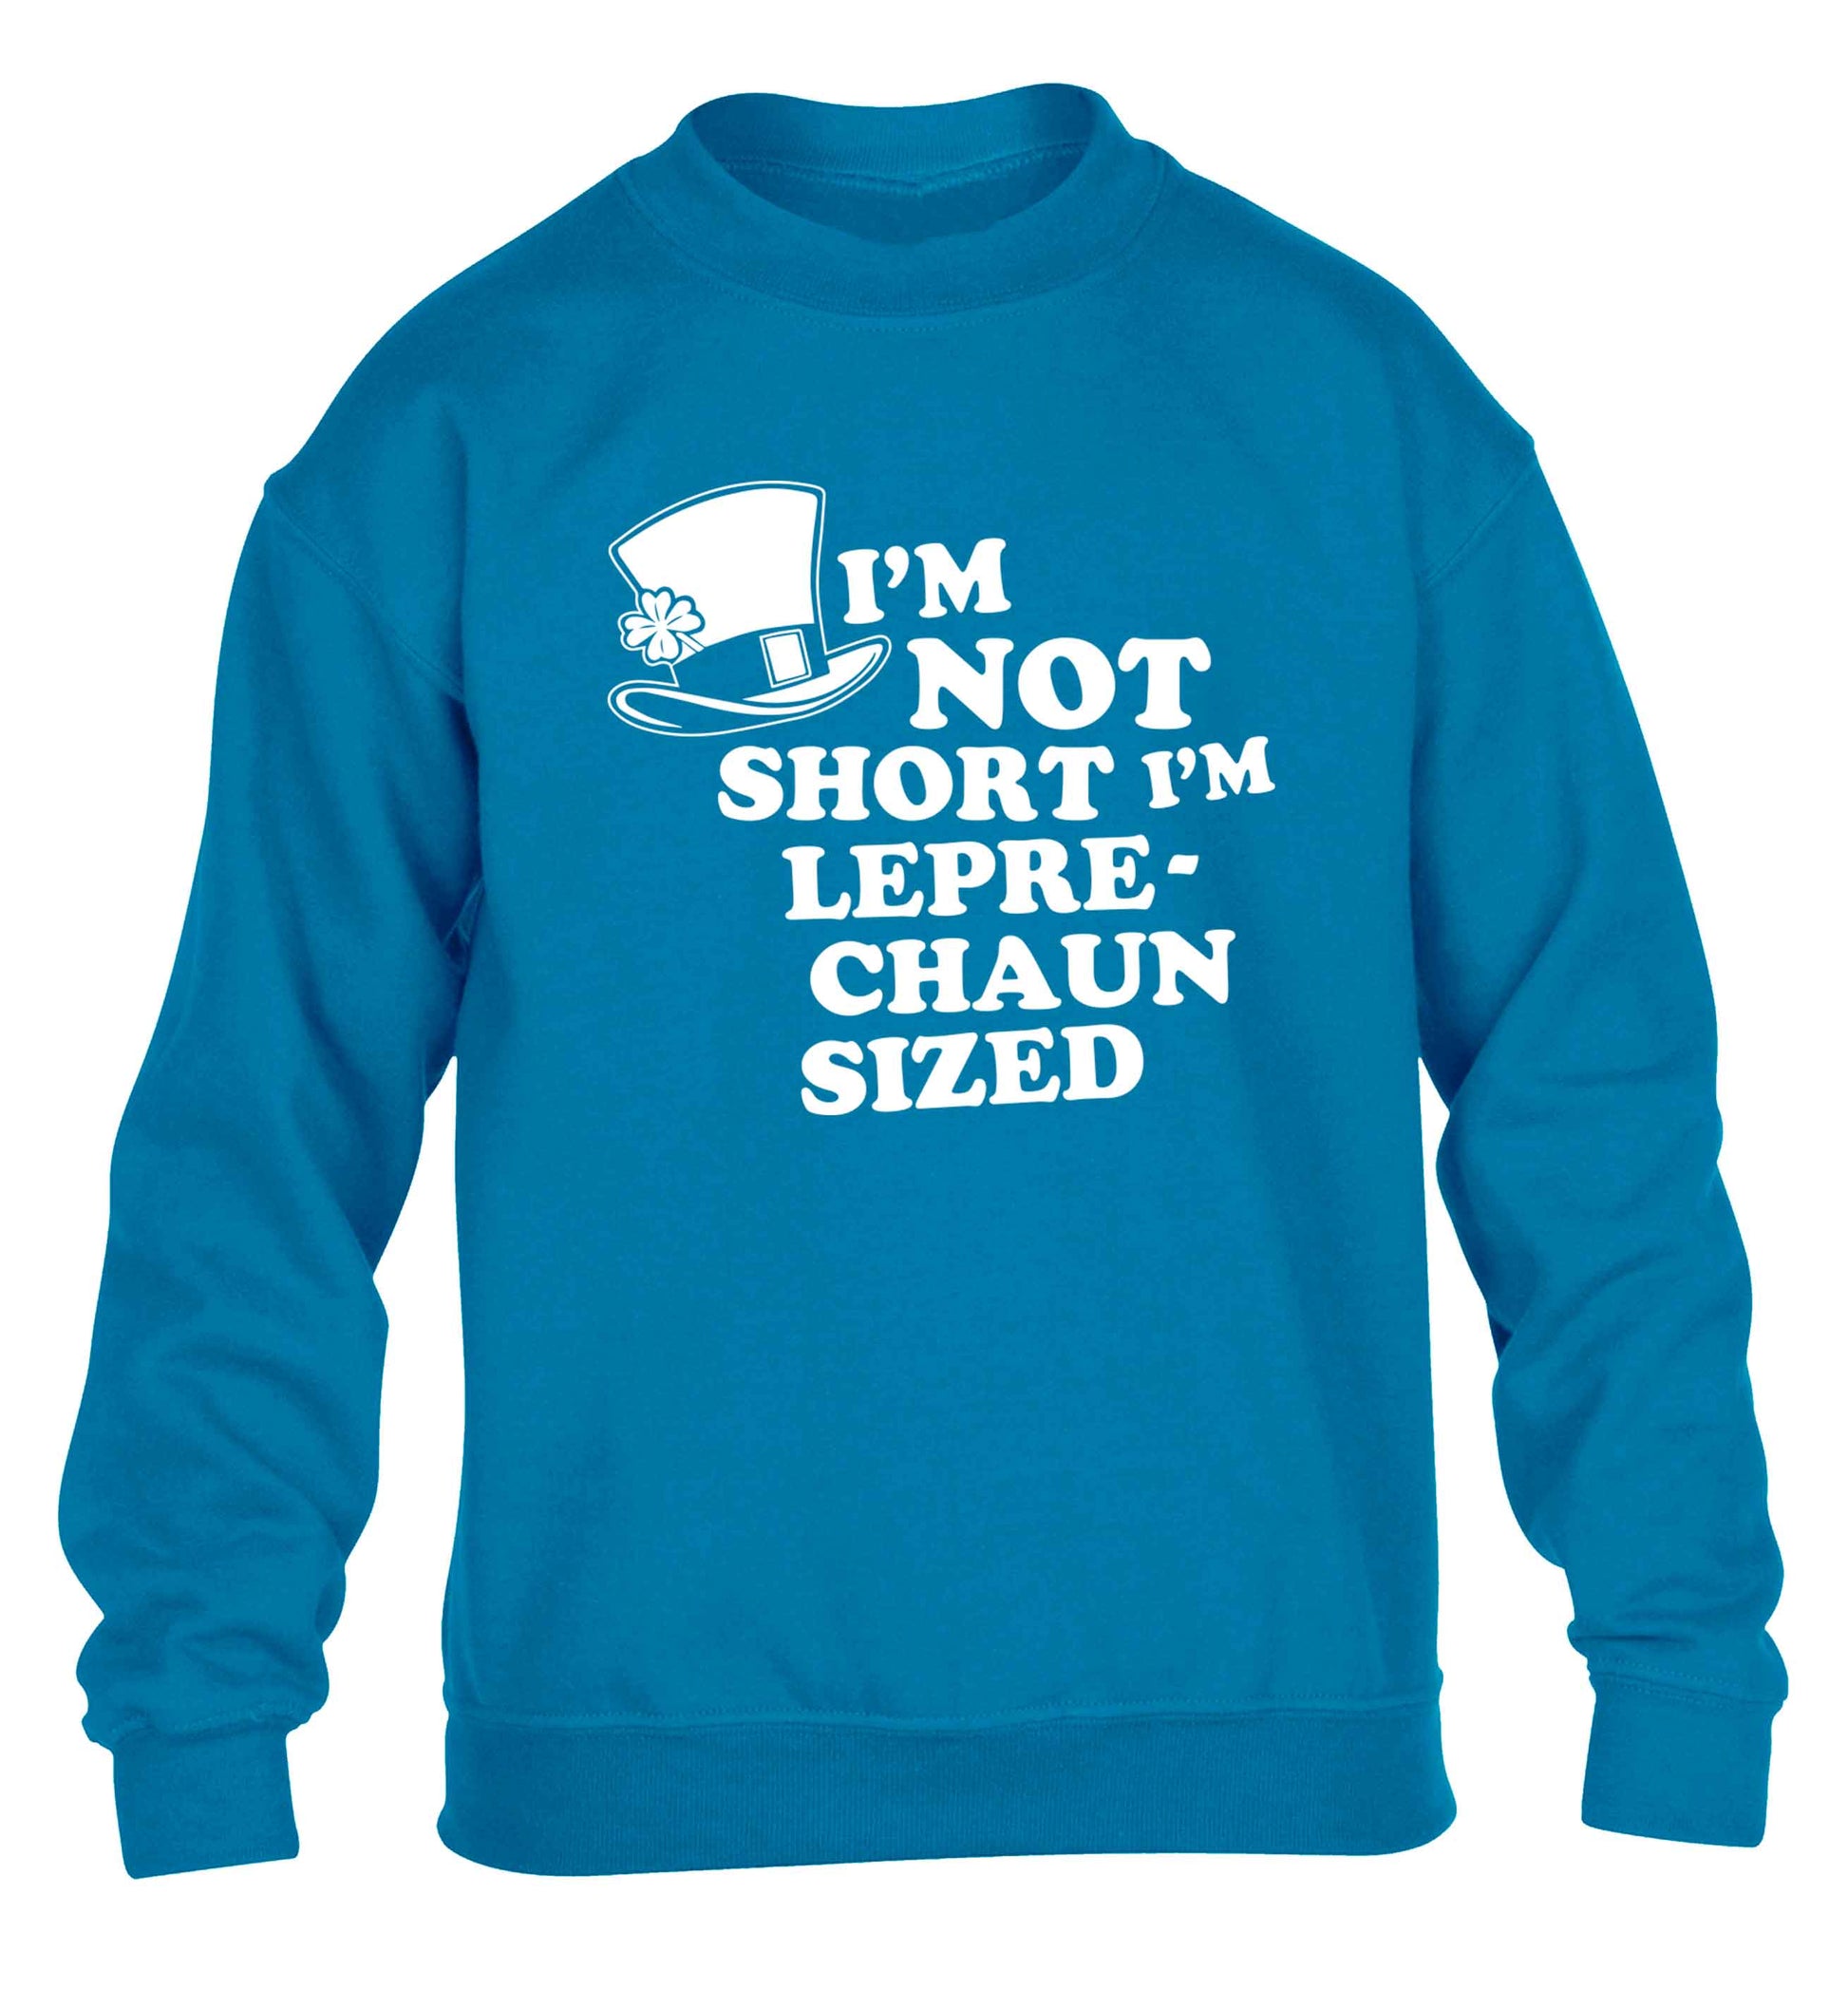 I'm not short I'm leprechaun sized children's blue sweater 12-13 Years